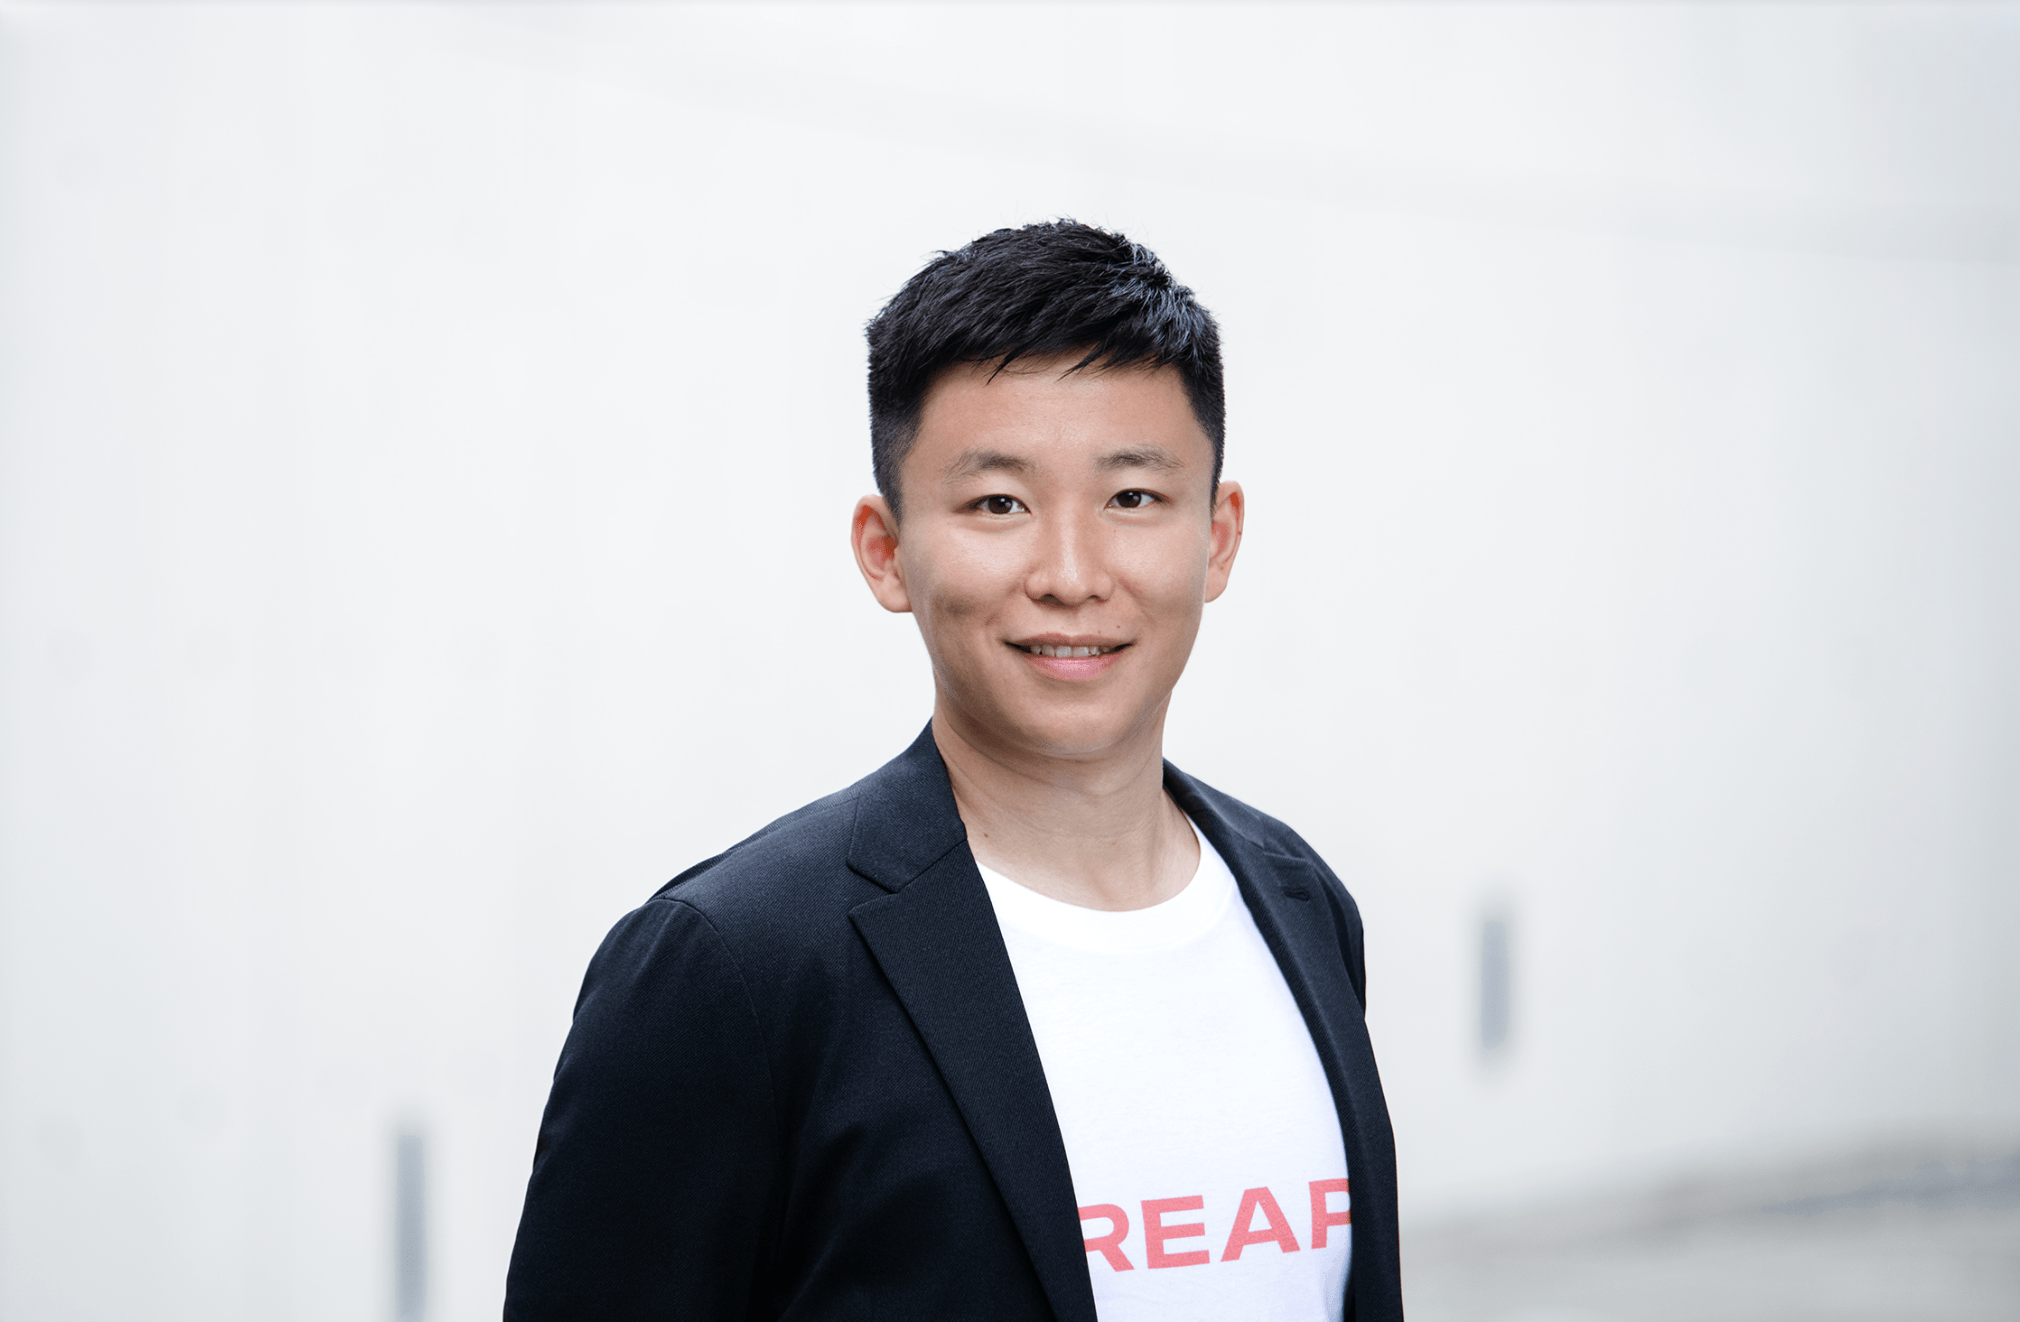 HK-based fintech startup Reap raises $40m to expand footprint